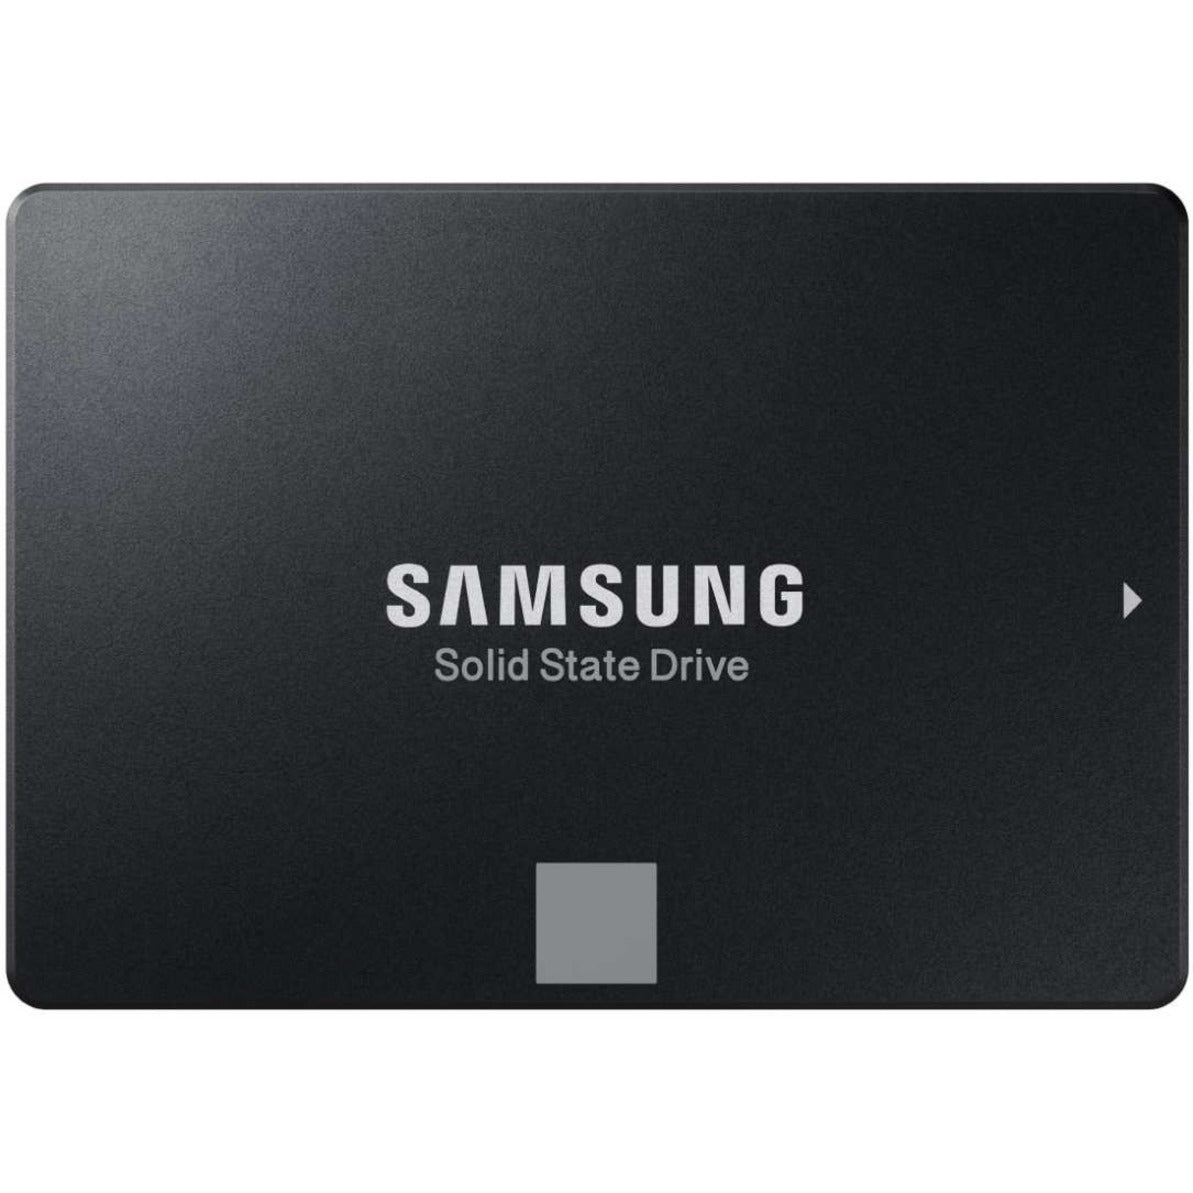 Samsung MZ-77E4T0E 870 EVO 4TB 2.5 SATA 6Gbps Solid State Drive 5 Year Warranty 560 MB/s Read 530 MB/s Write